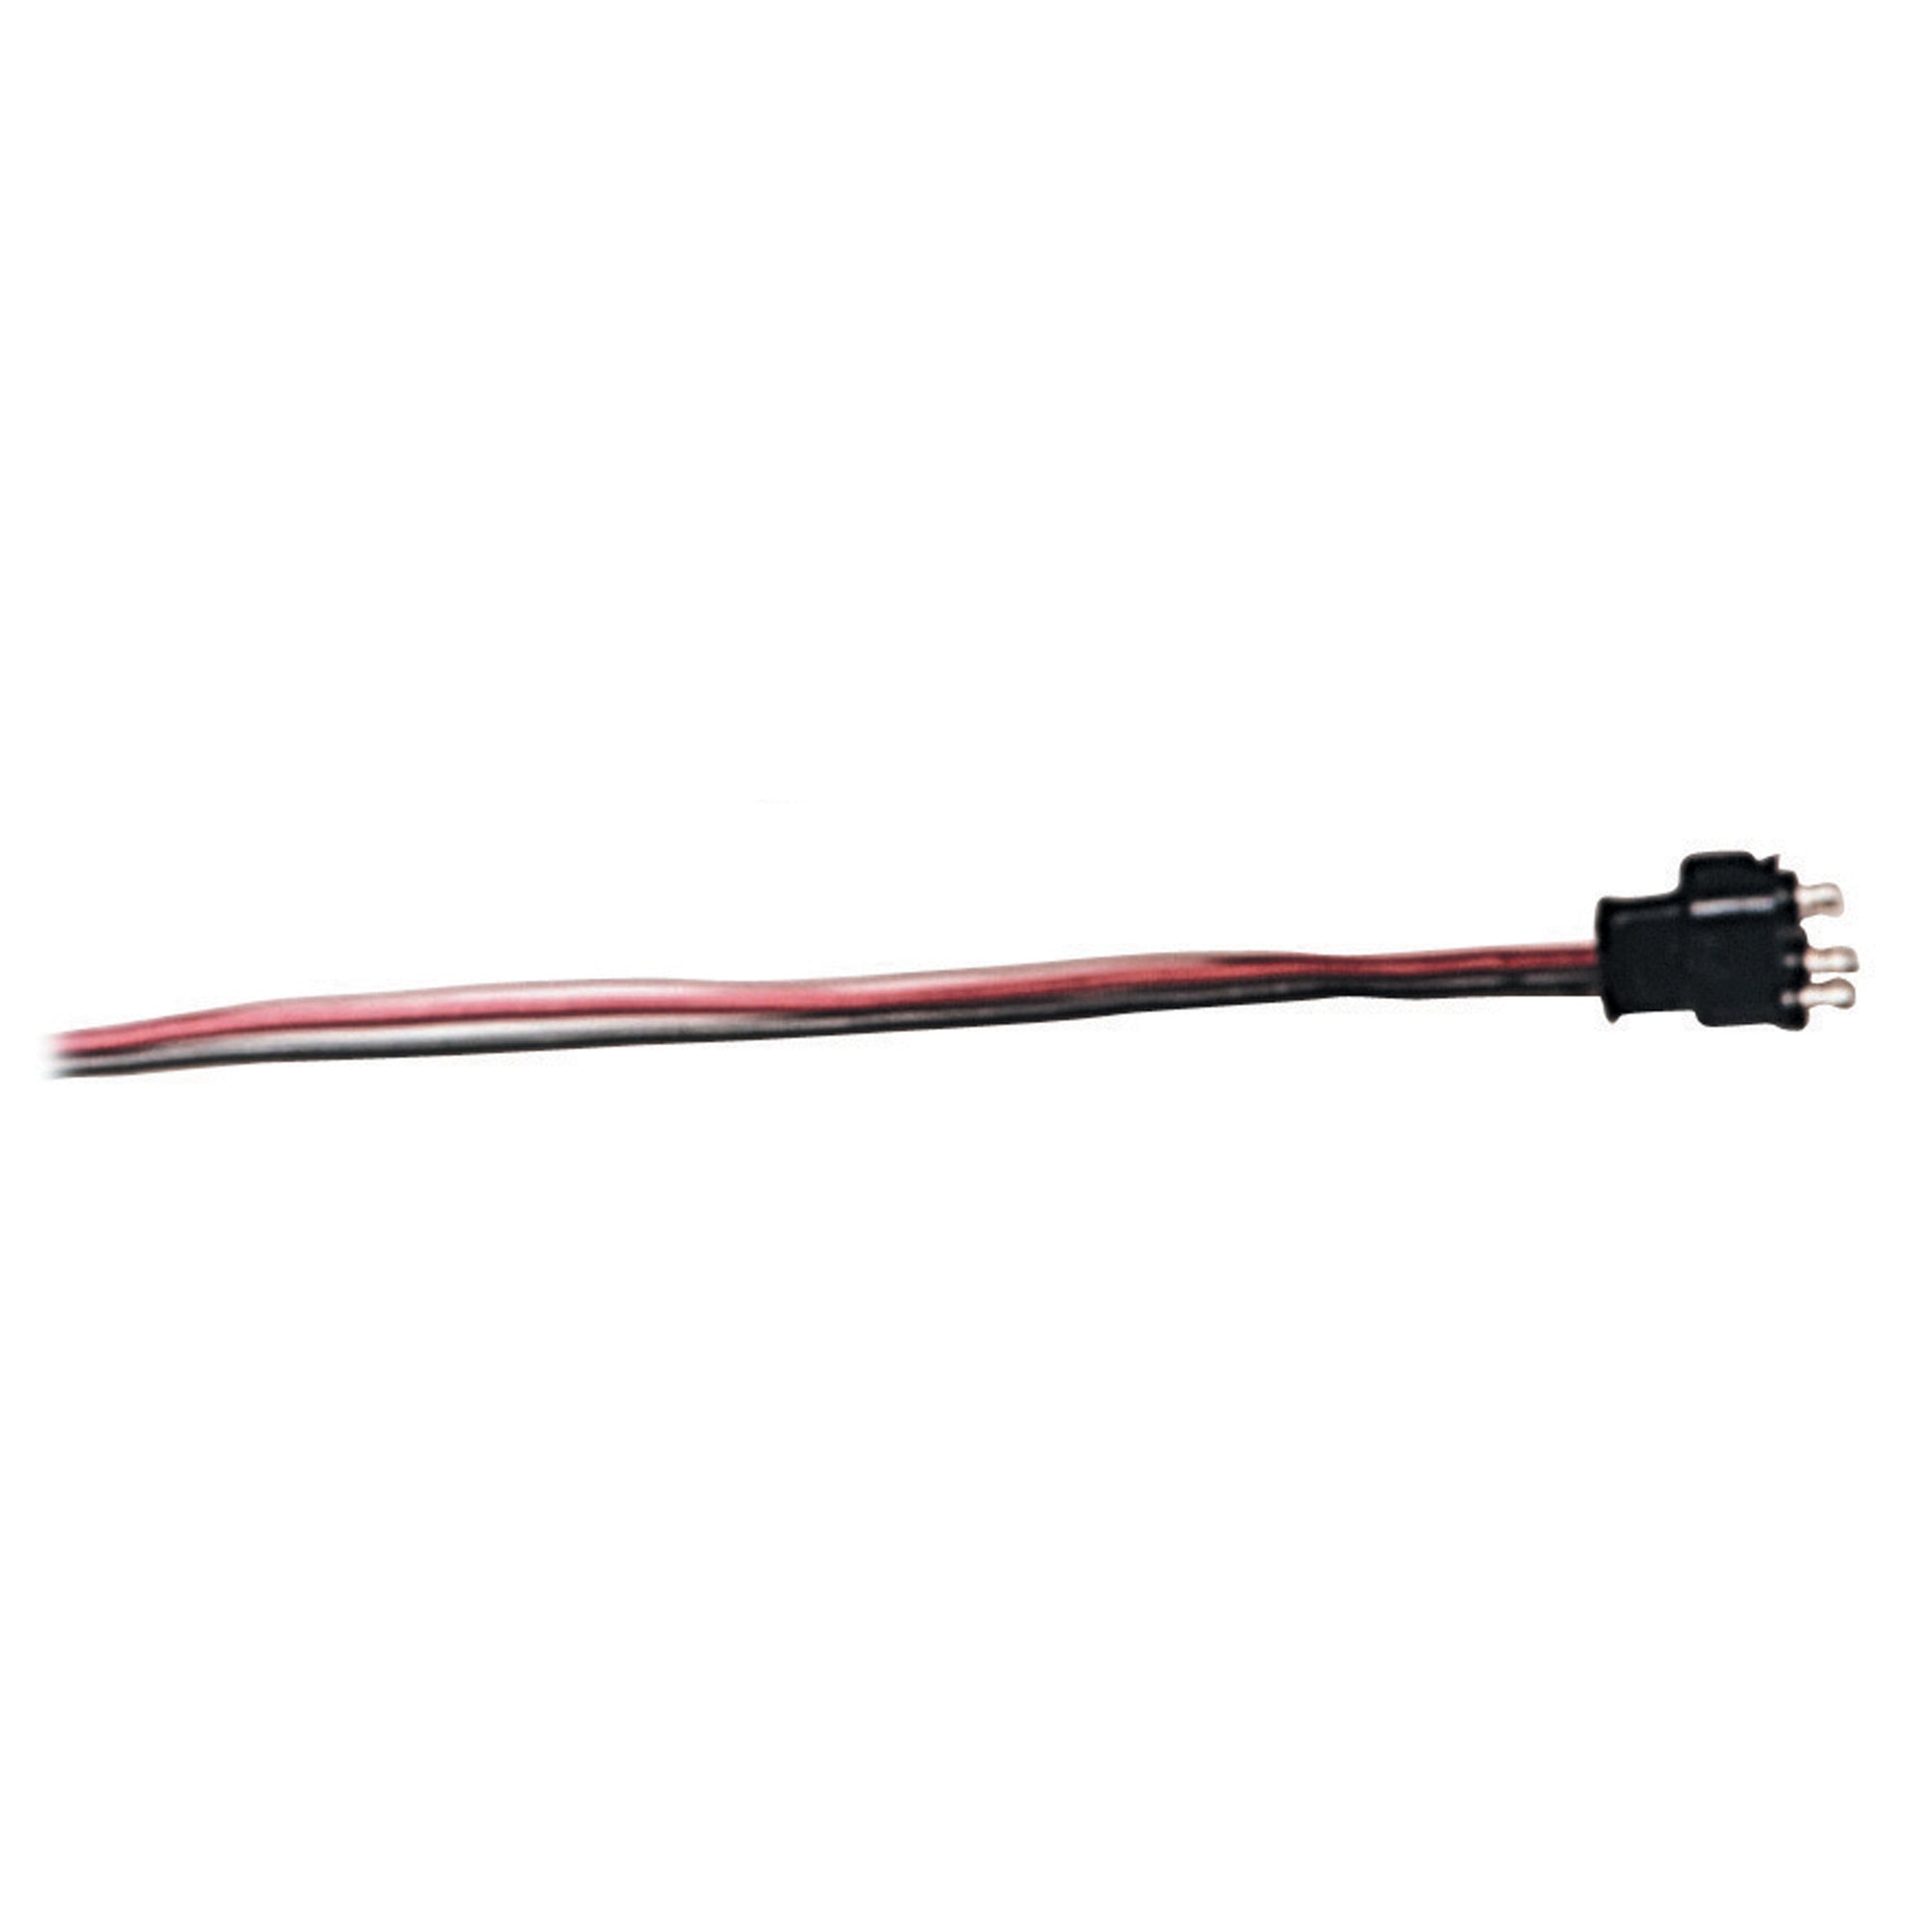 Peterson 431-491 Straight Incandescent Wire Plug - 10.5", 3-Wire